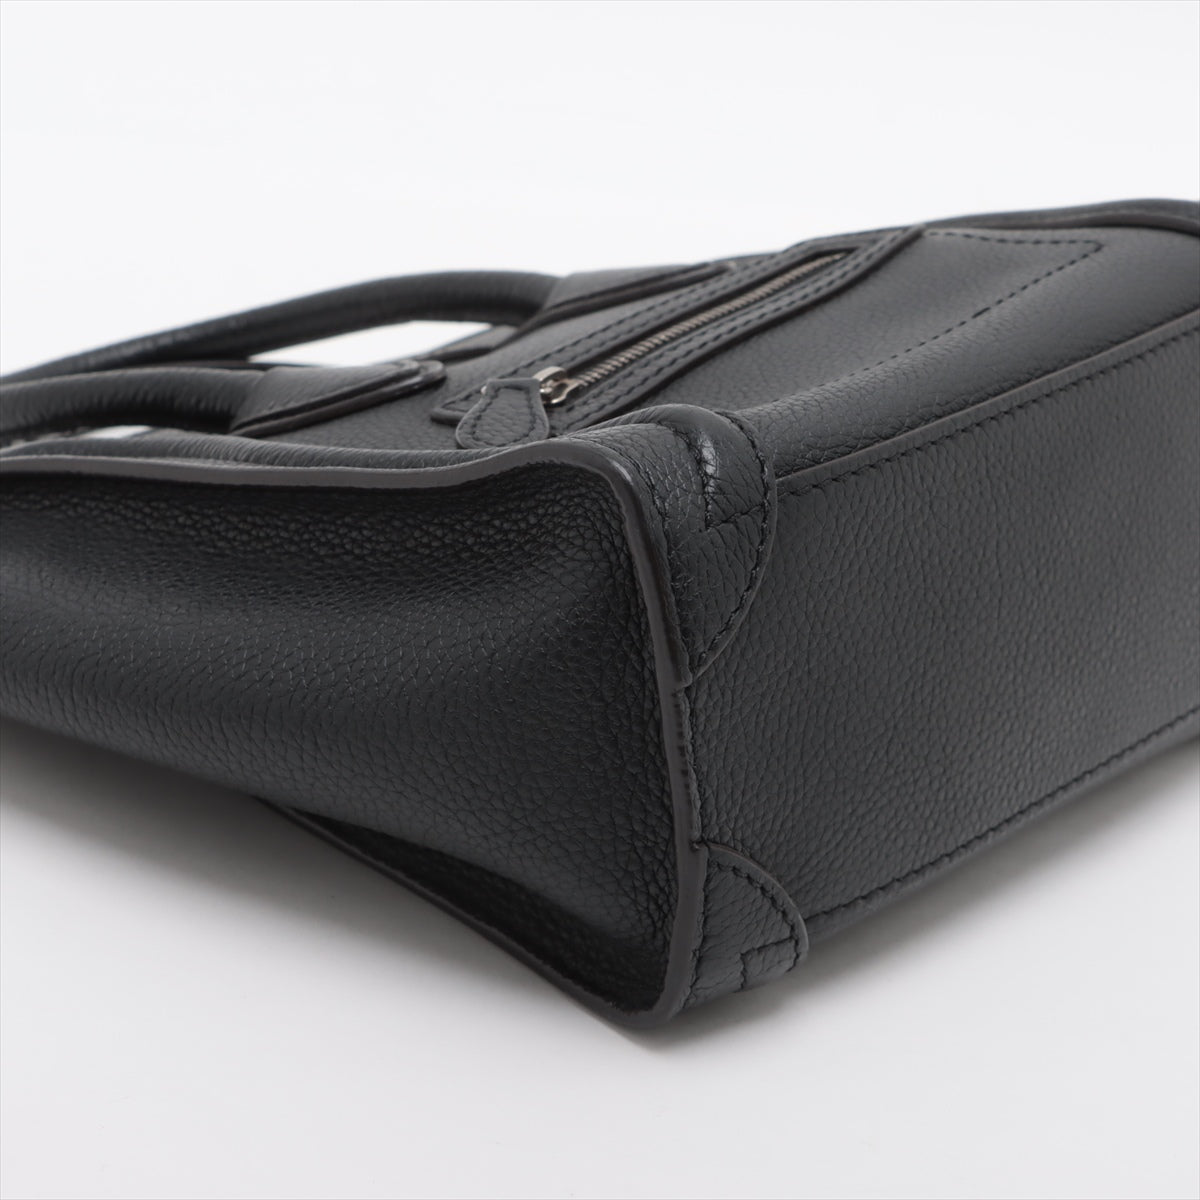 CELINE Luggage Nano shopper Leather 2way handbag Black